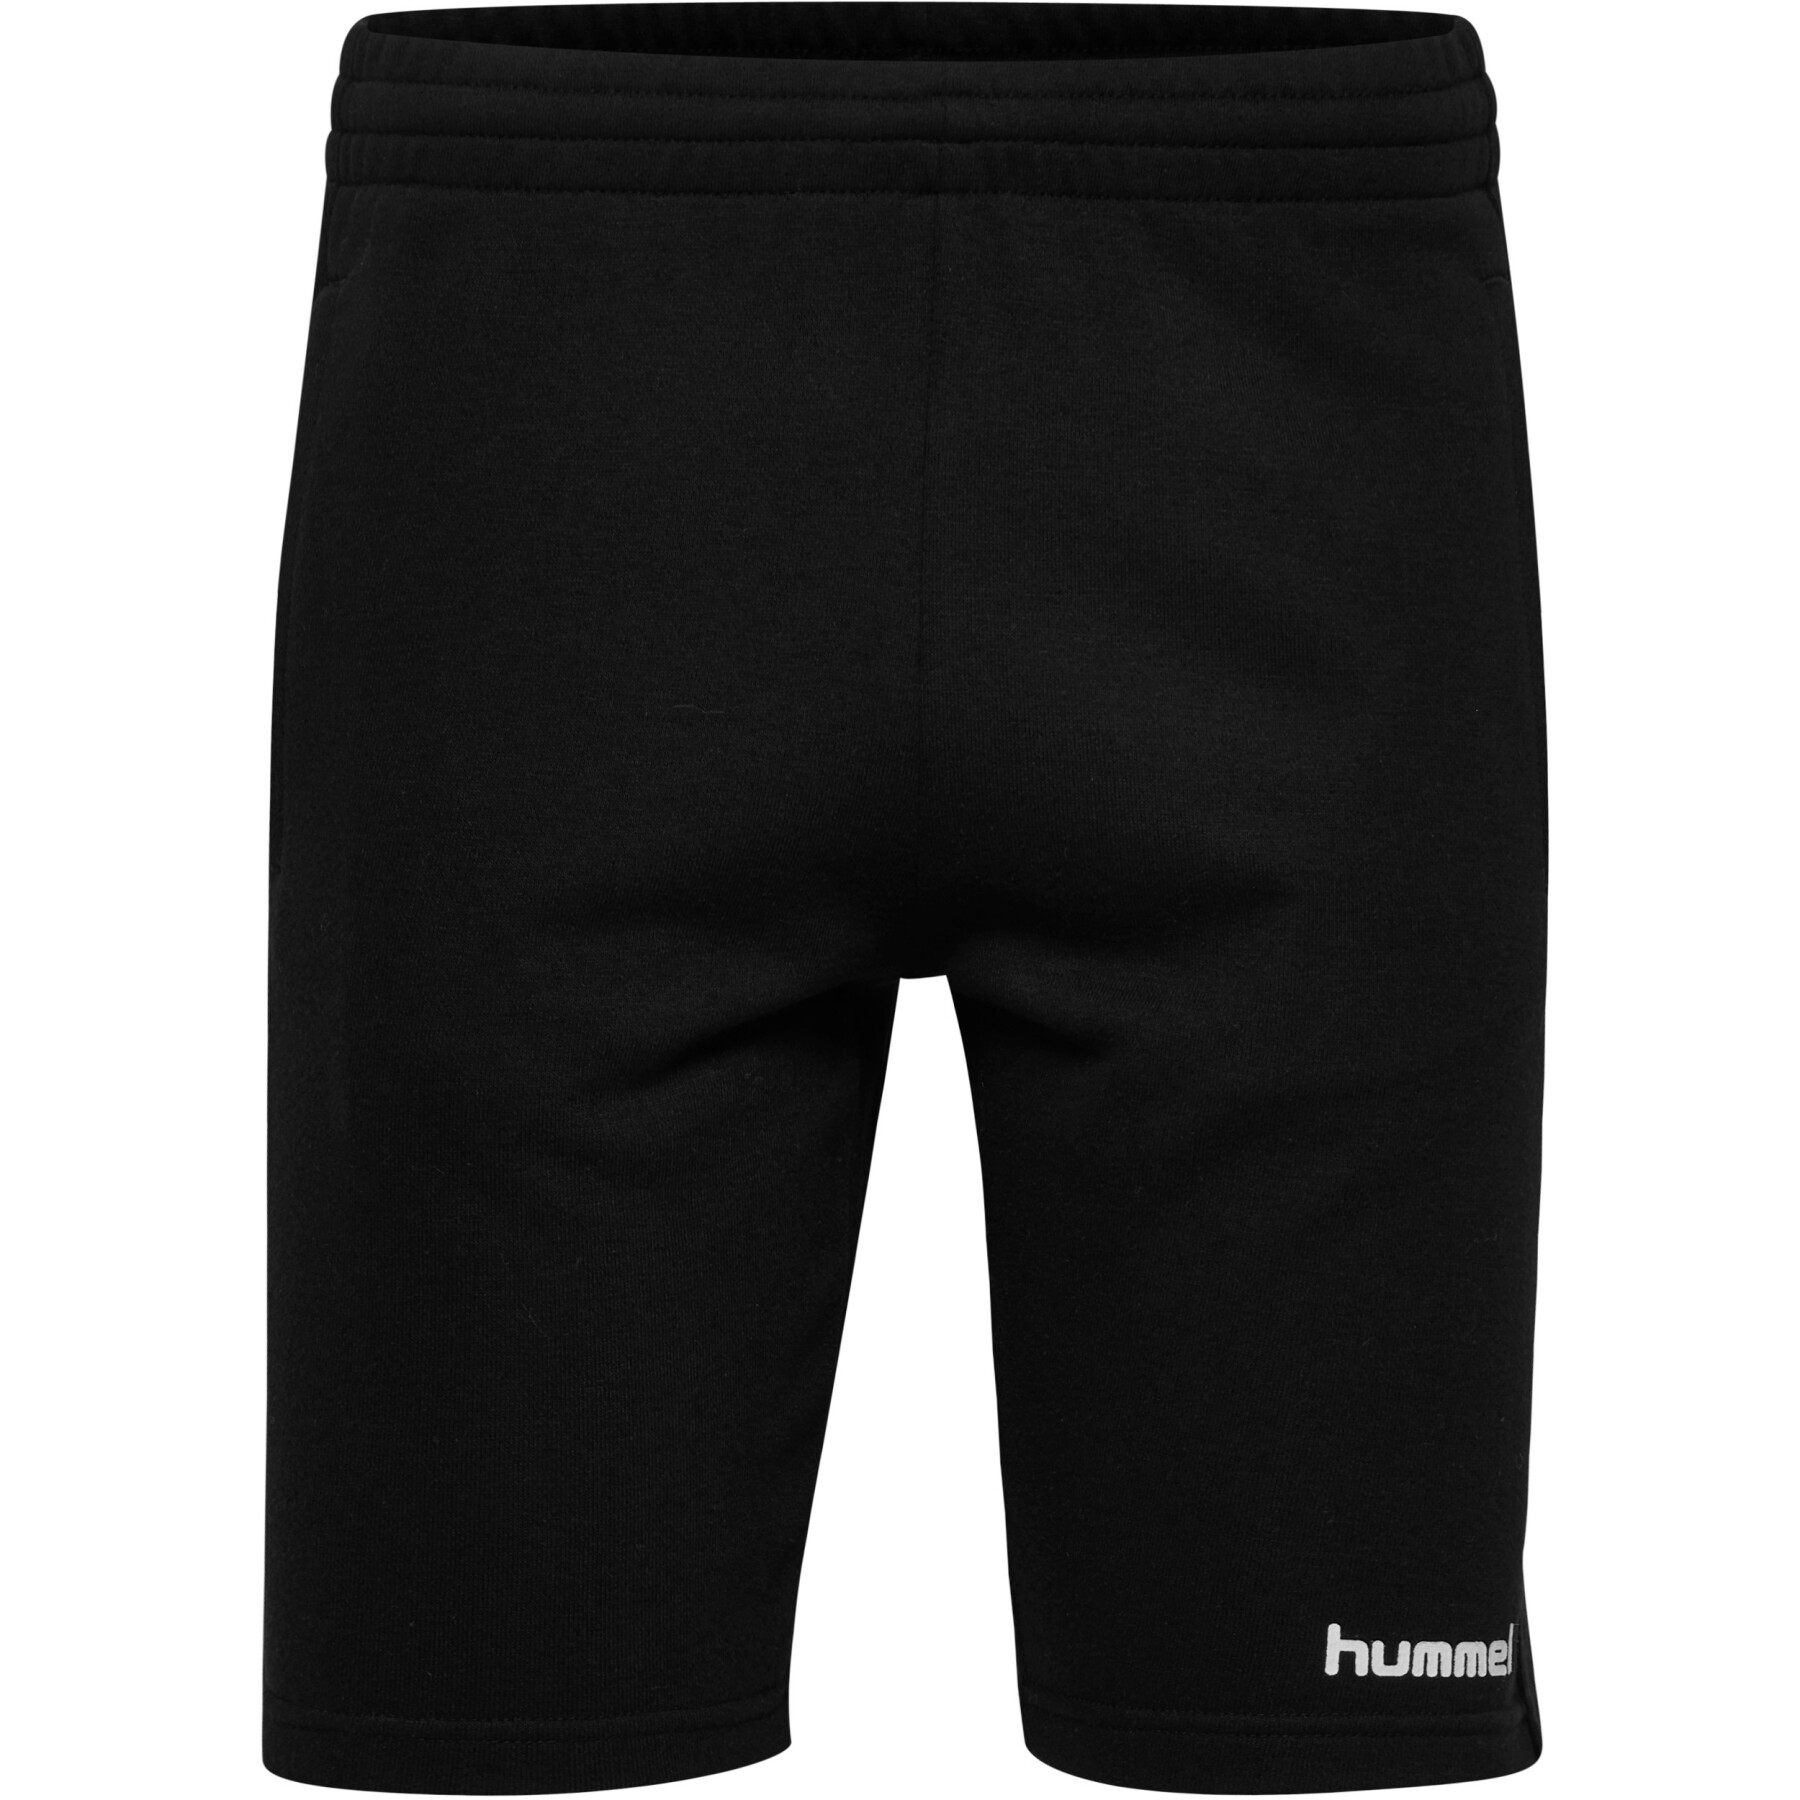 Women's shorts Hummel hmlGO cotton